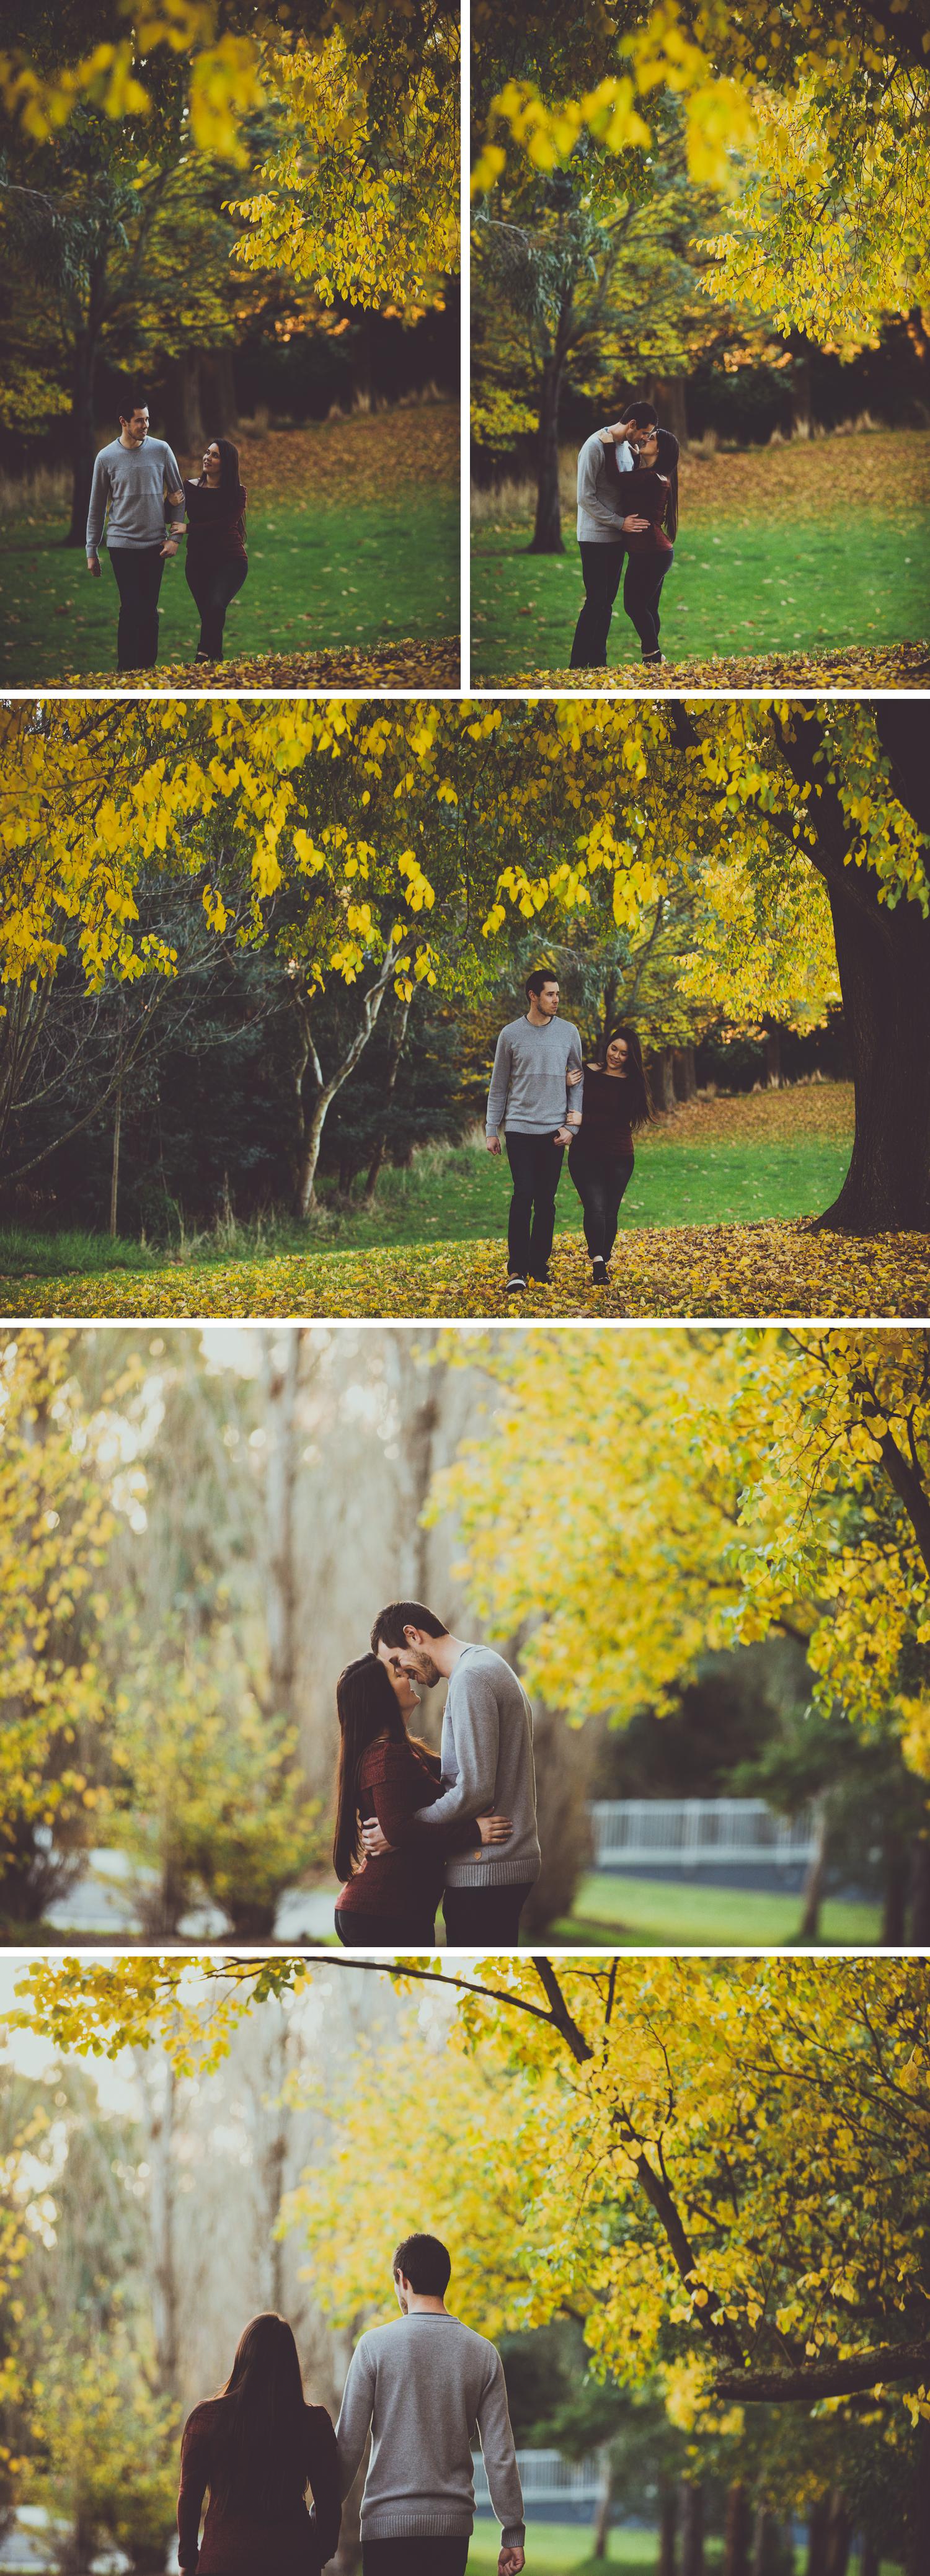 Park Photoshoot Engagement Shoot, Couple Embracing, Soft Light by Danae Studios